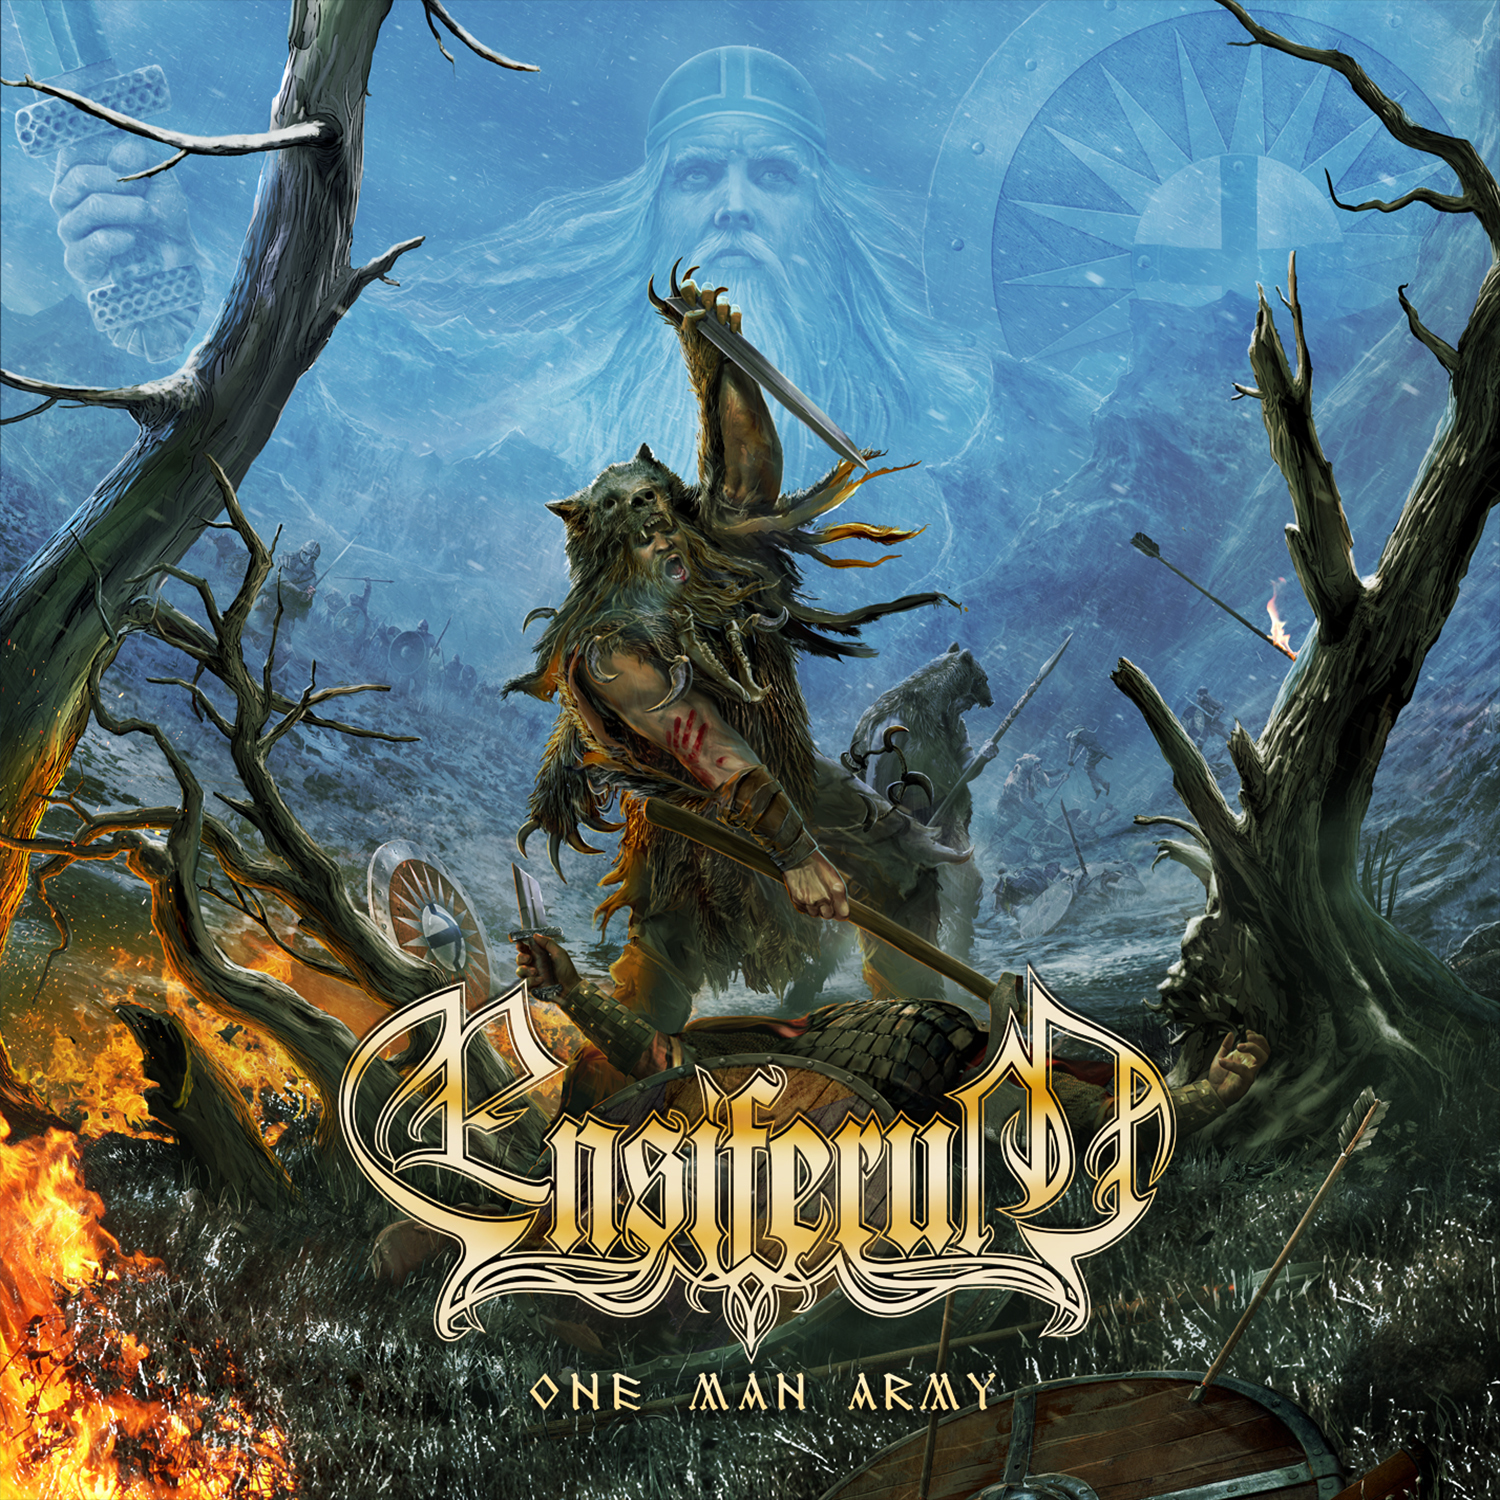 Ensiferum One Man Army album cover art